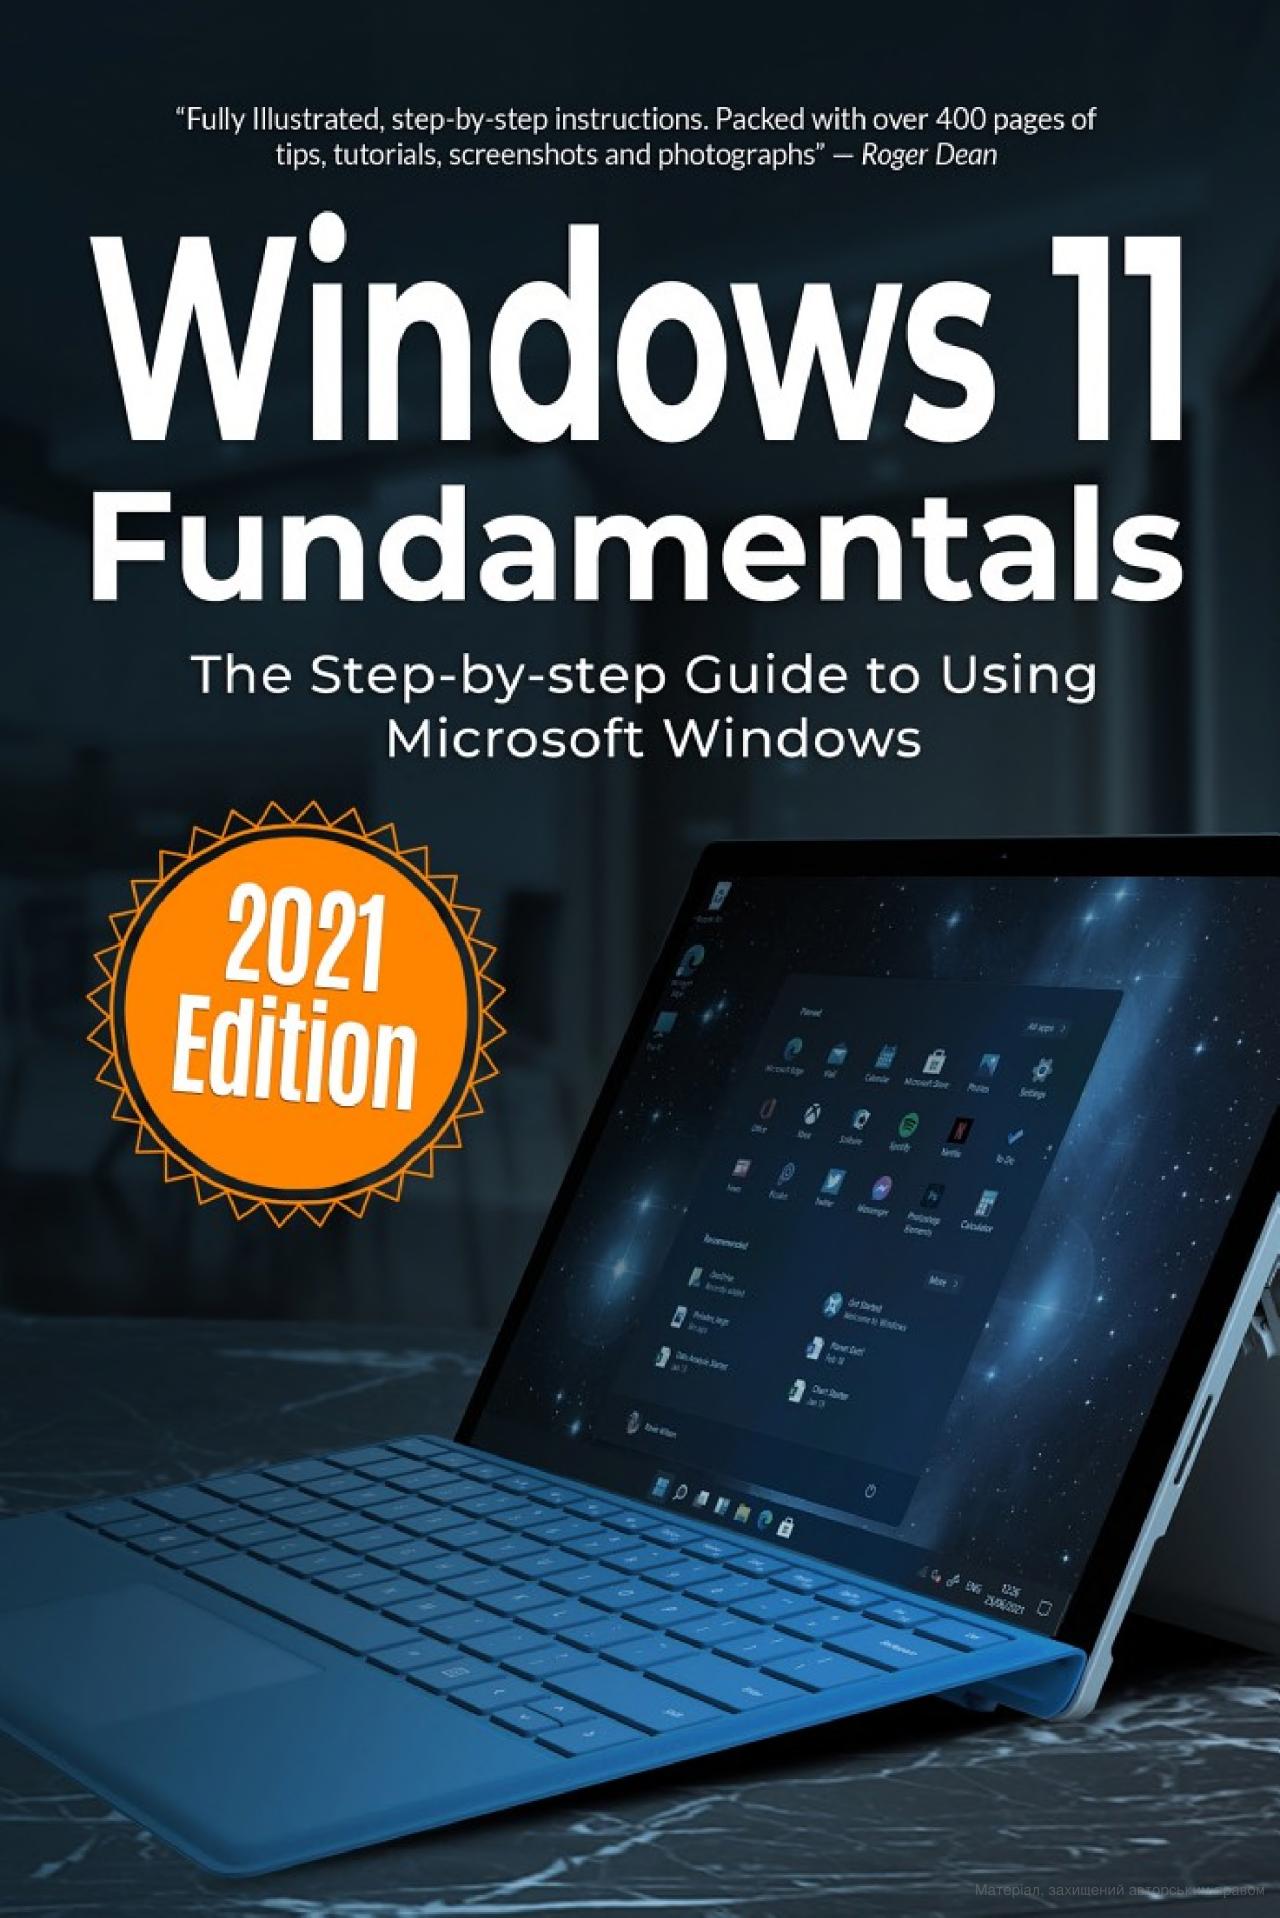 Windows 11 Fundamentals